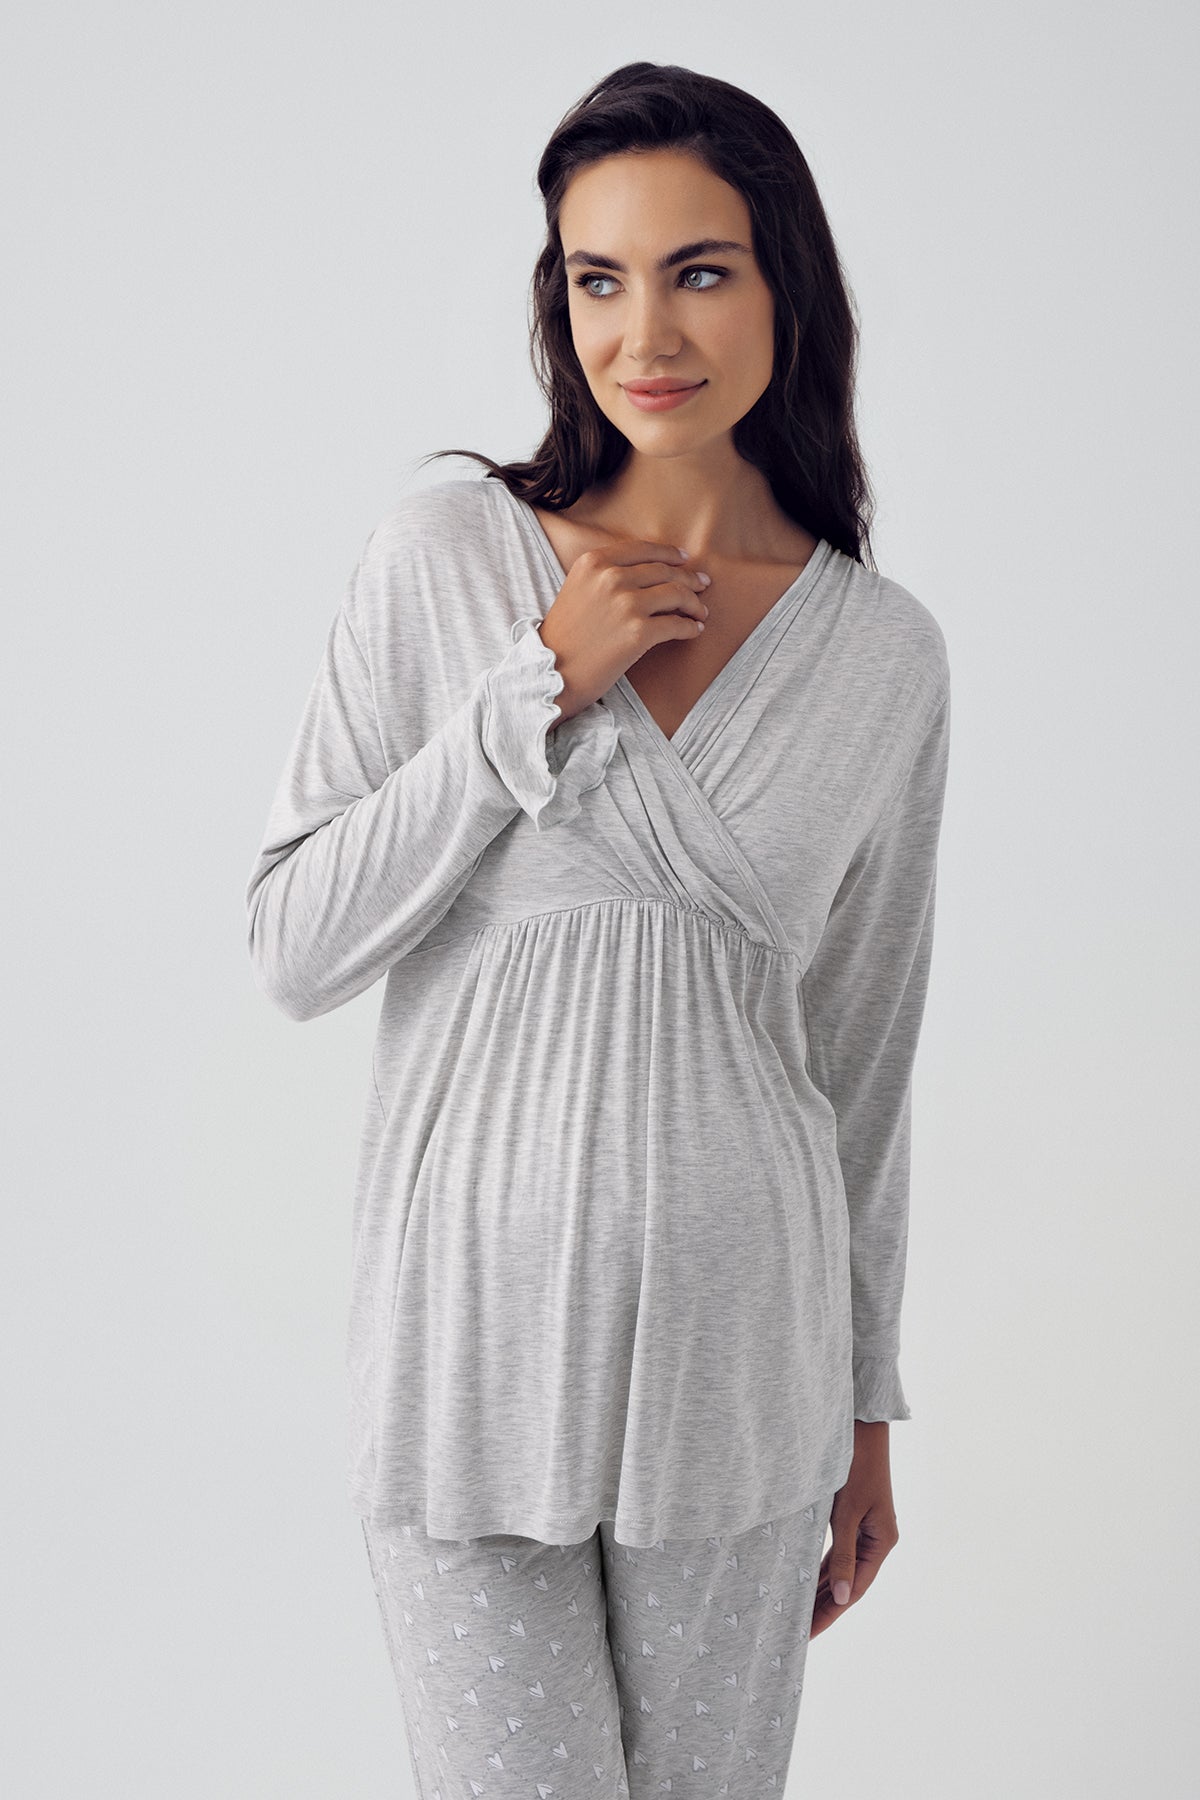 Polka Dot Double Breasted Maternity & Nursing Pajamas Grey - 15202